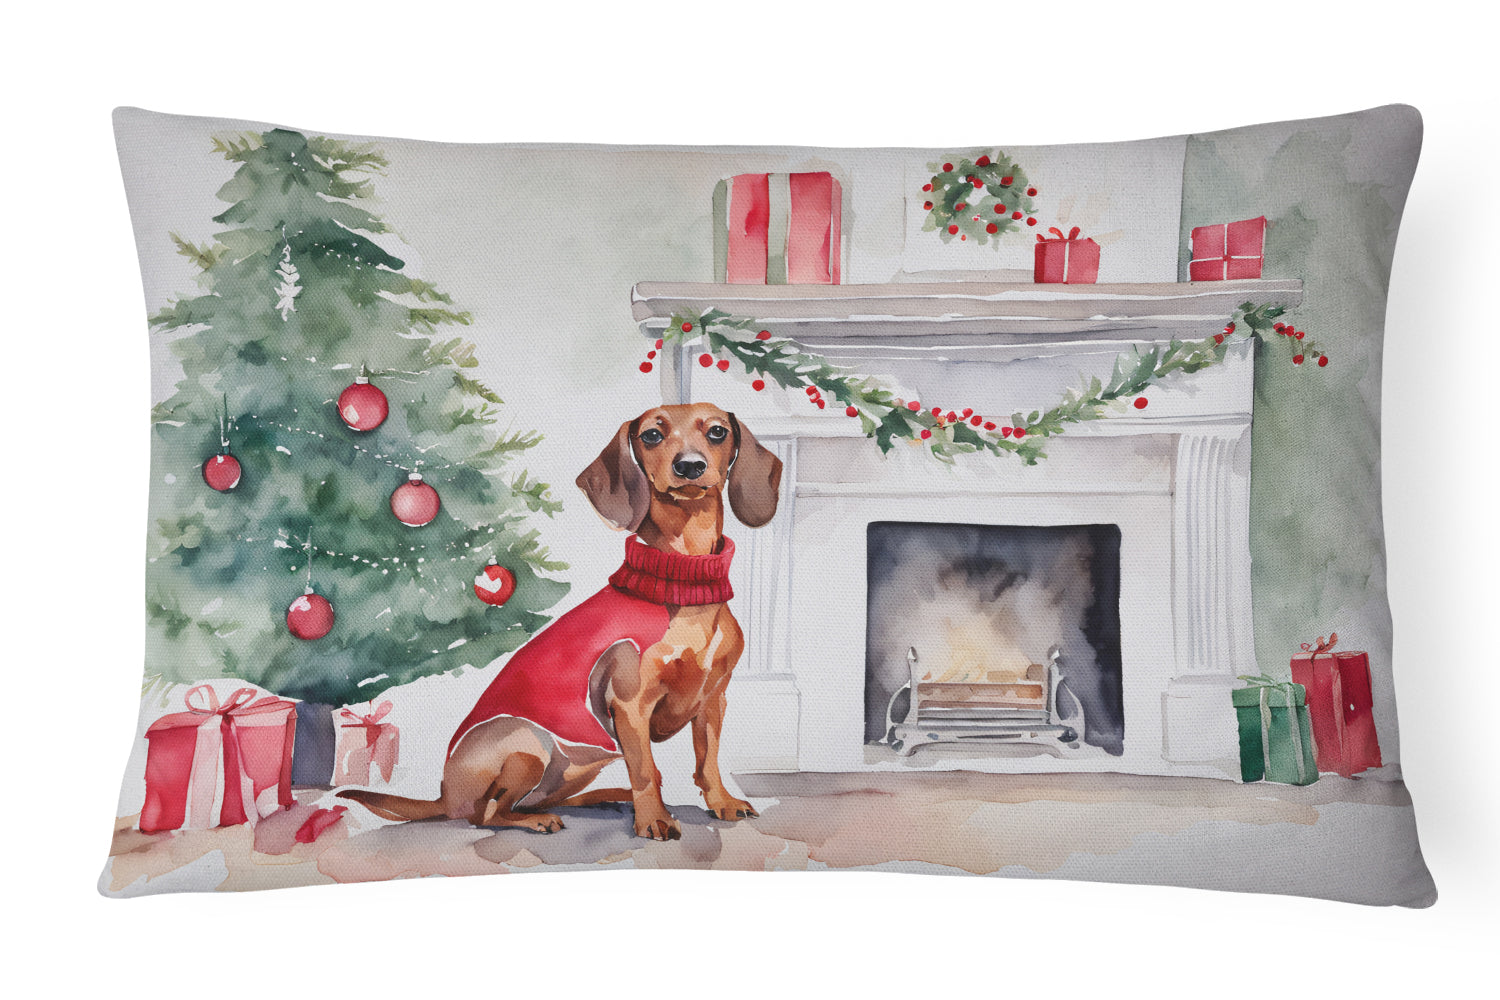 Buy this Dachshund Christmas Fabric Decorative Pillow